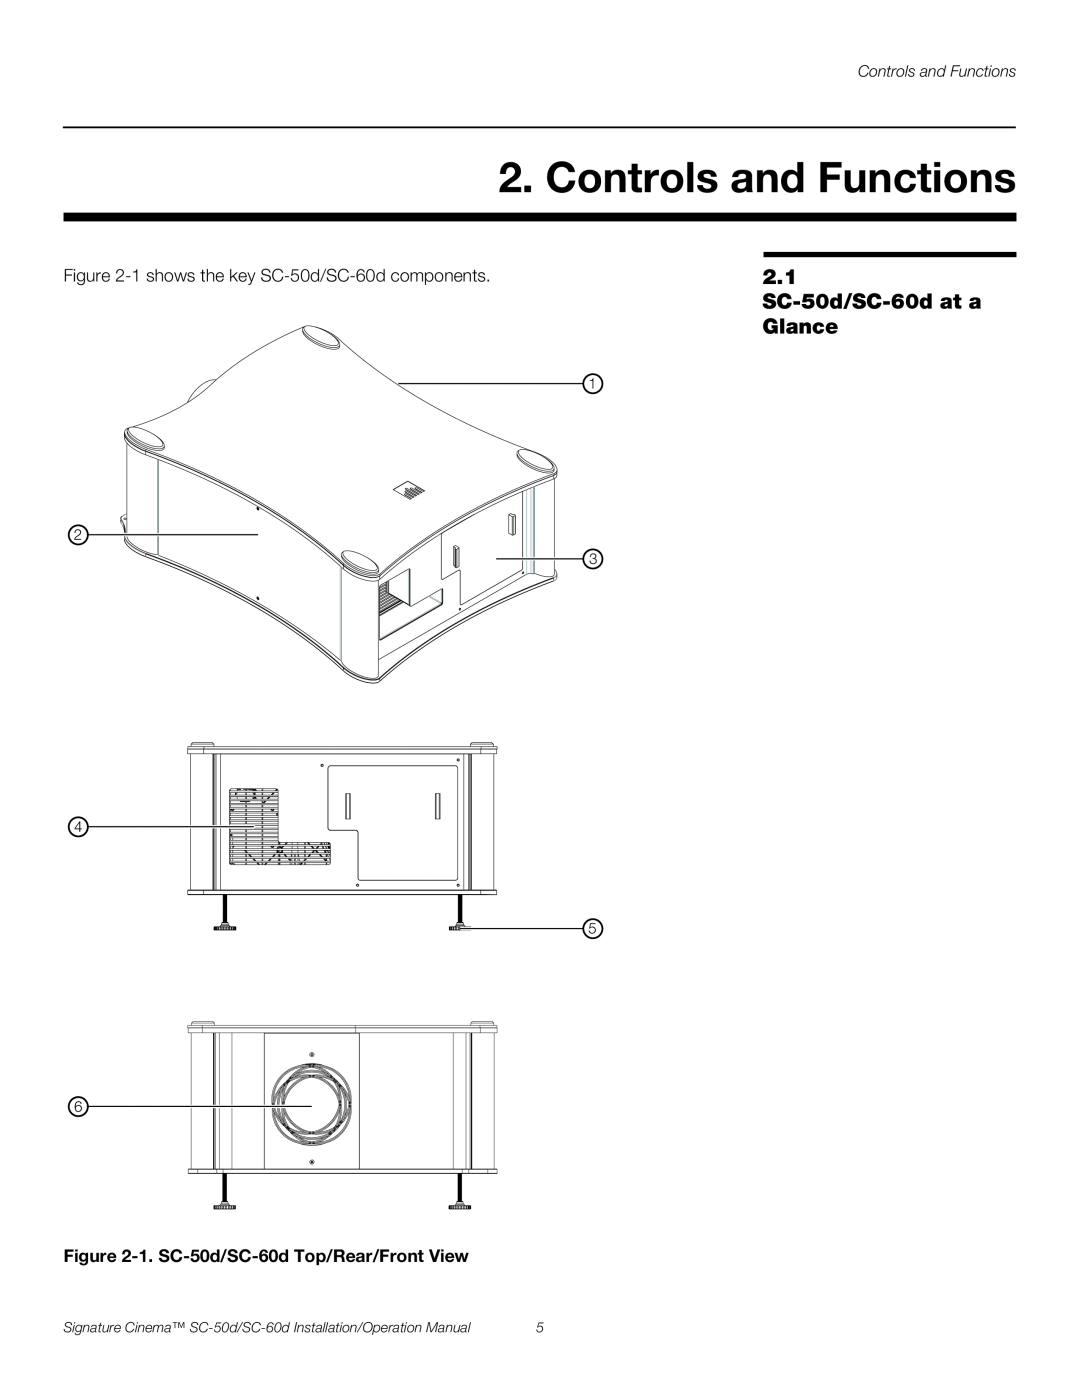 Runco SC-50D, SC-60D Controls and Functions, 2.1 SC-50d/SC-60dat a Glance, 1. SC-50d/SC-60dTop/Rear/Front View 